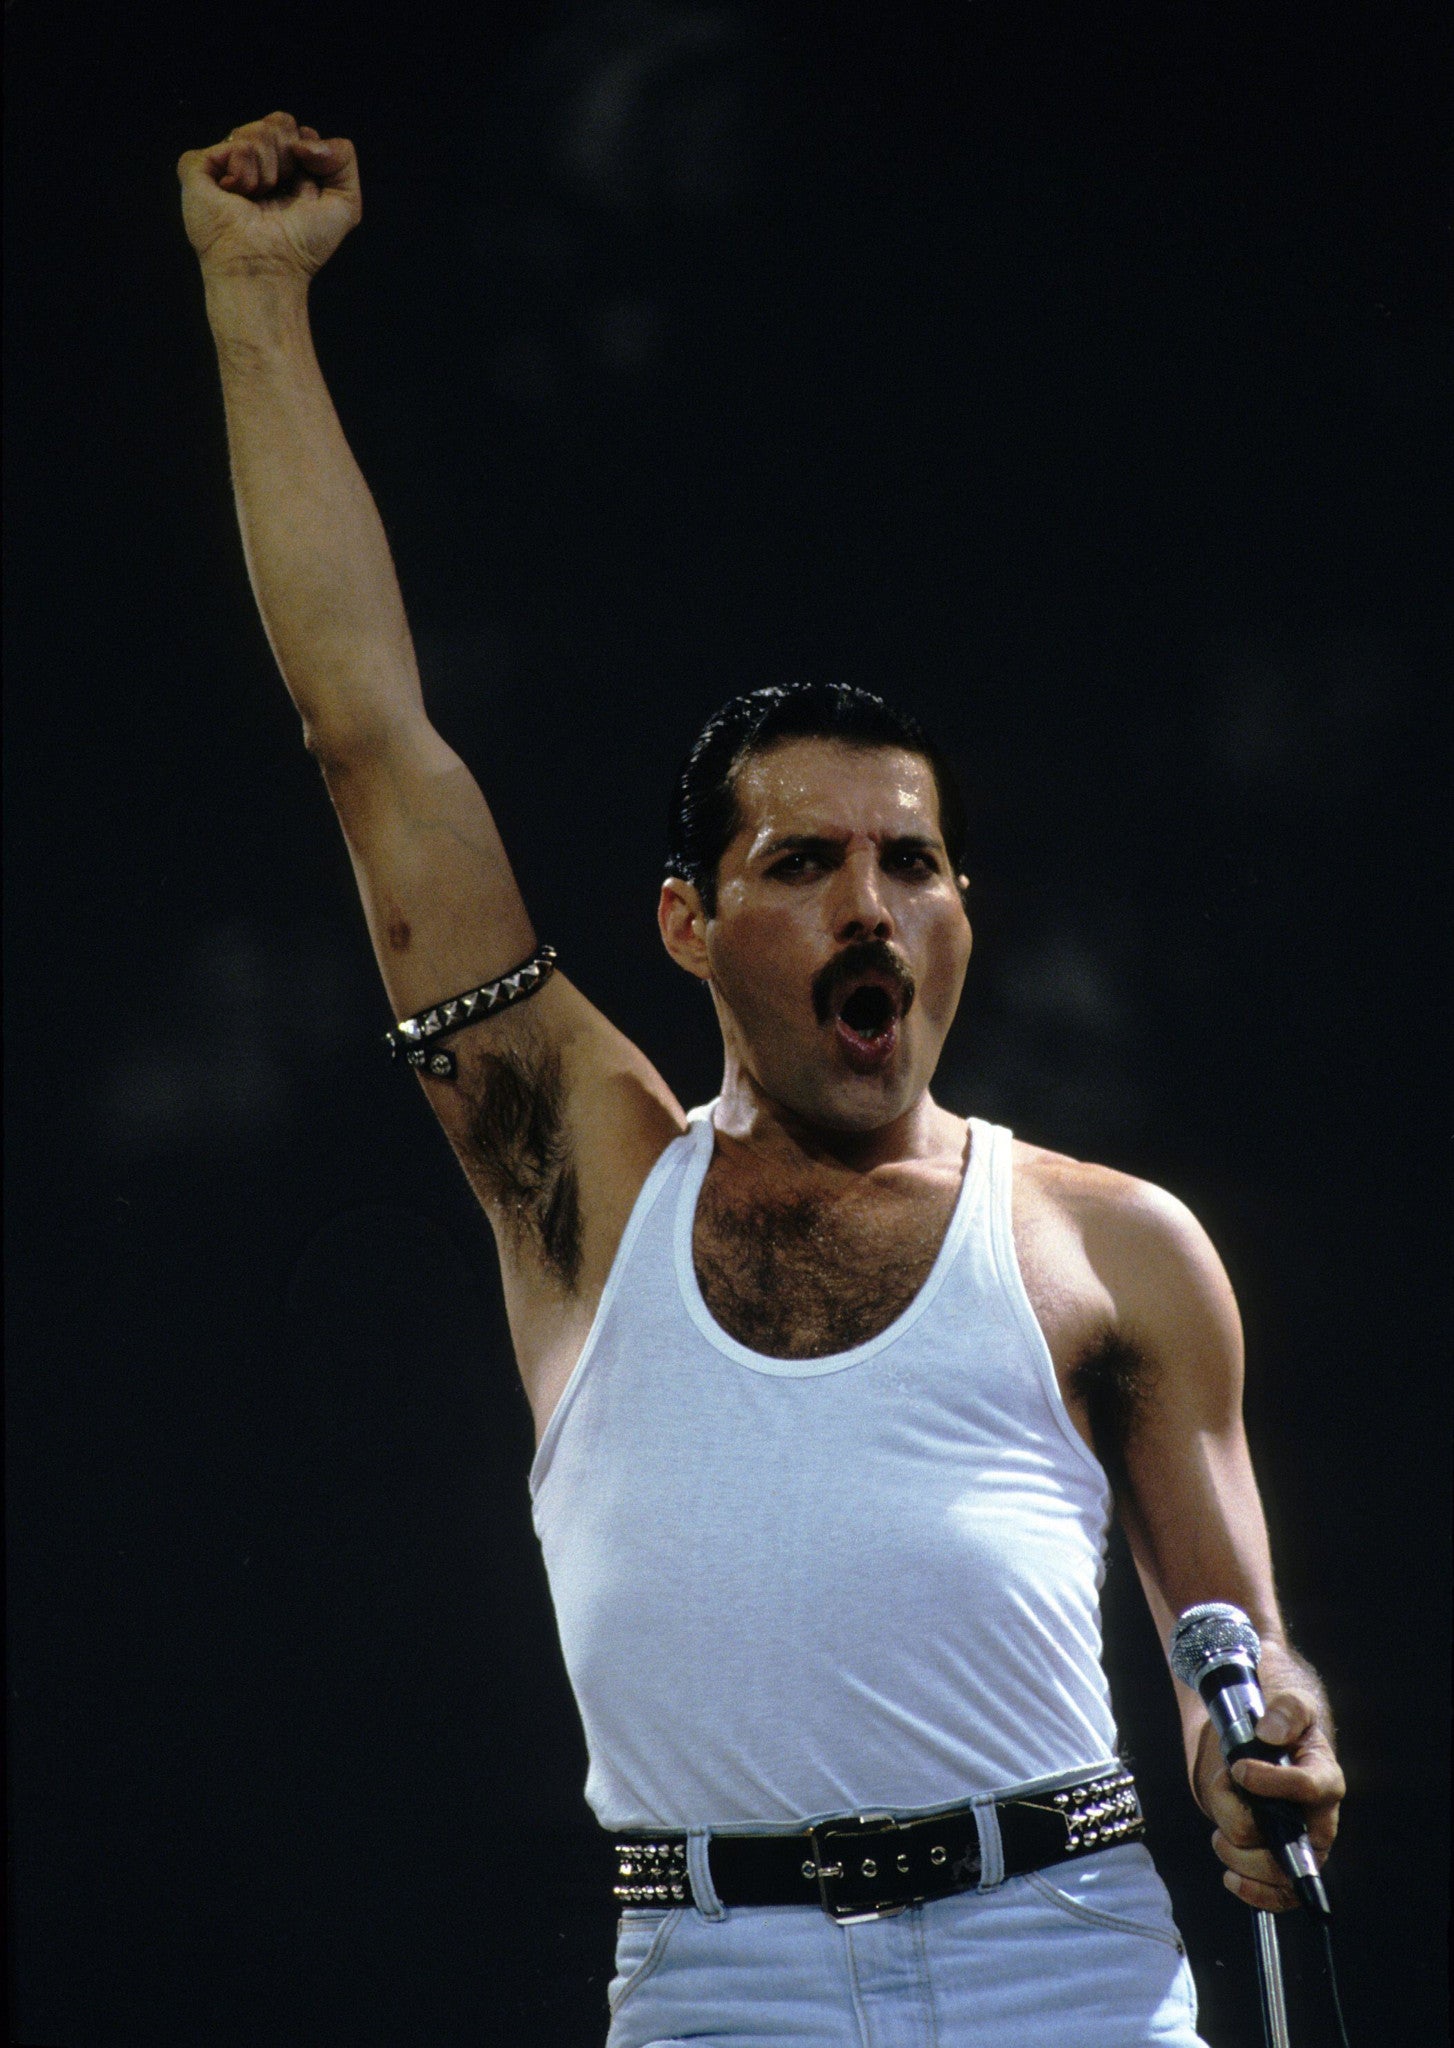 Queen - Freddie Mercury - A3 Poster